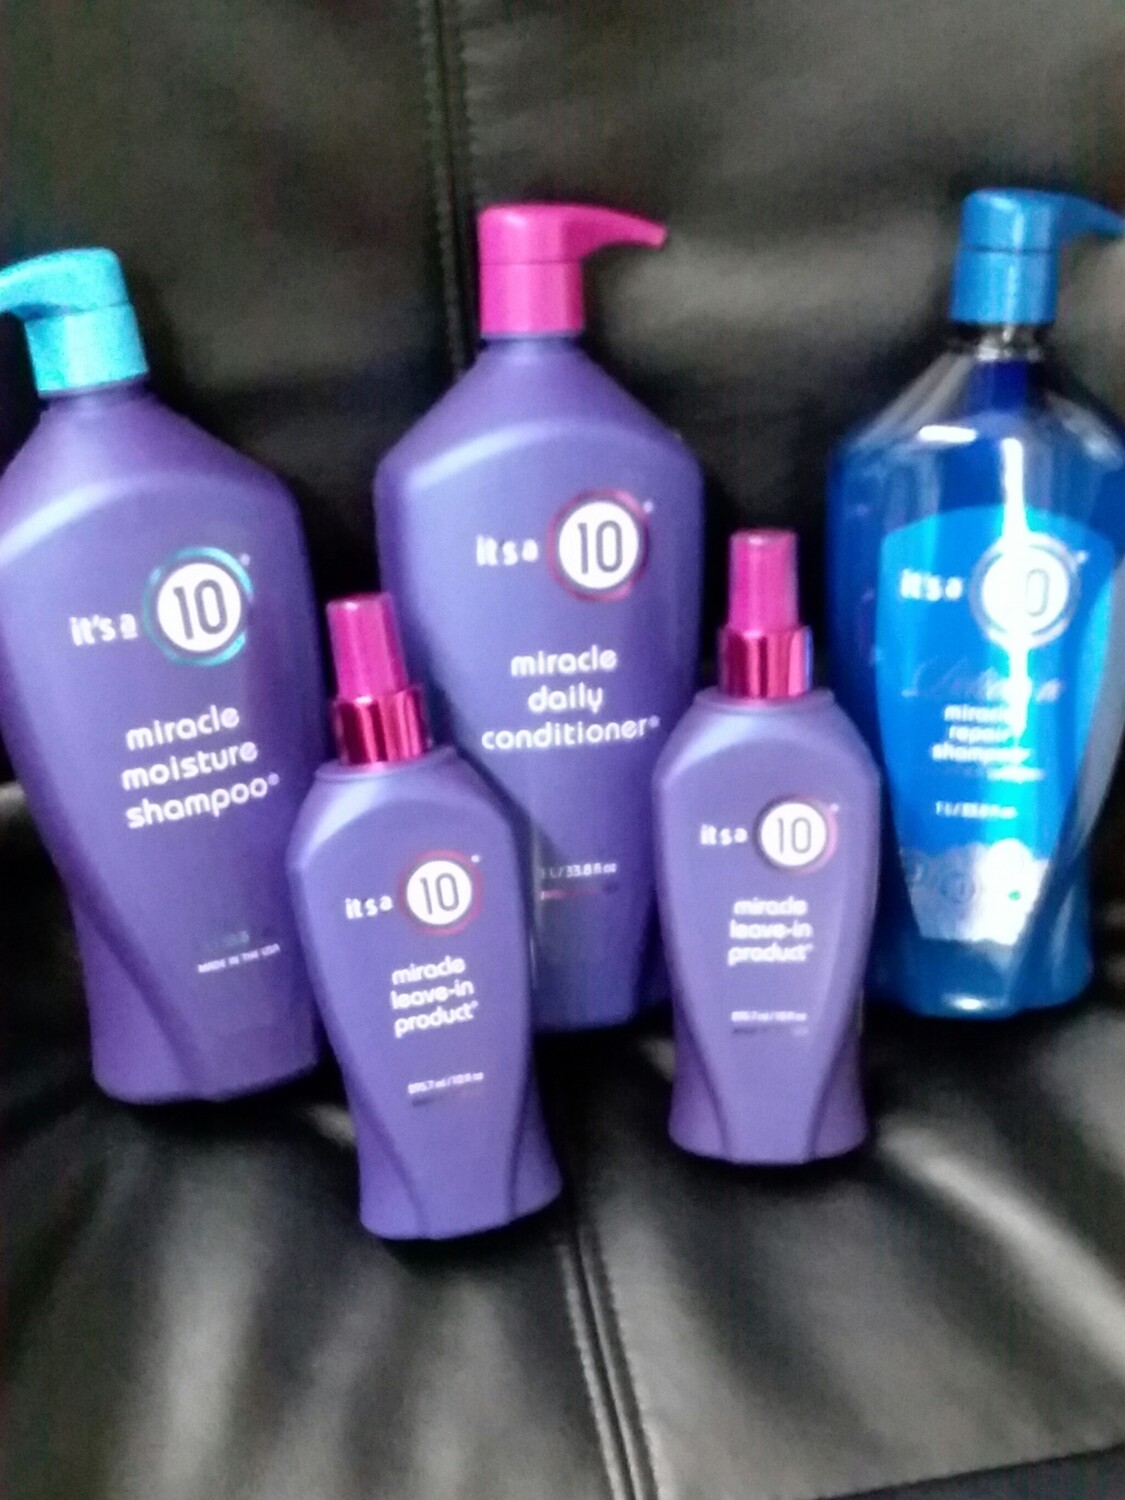 Its a 10 shampoo, conditioners,  treatments